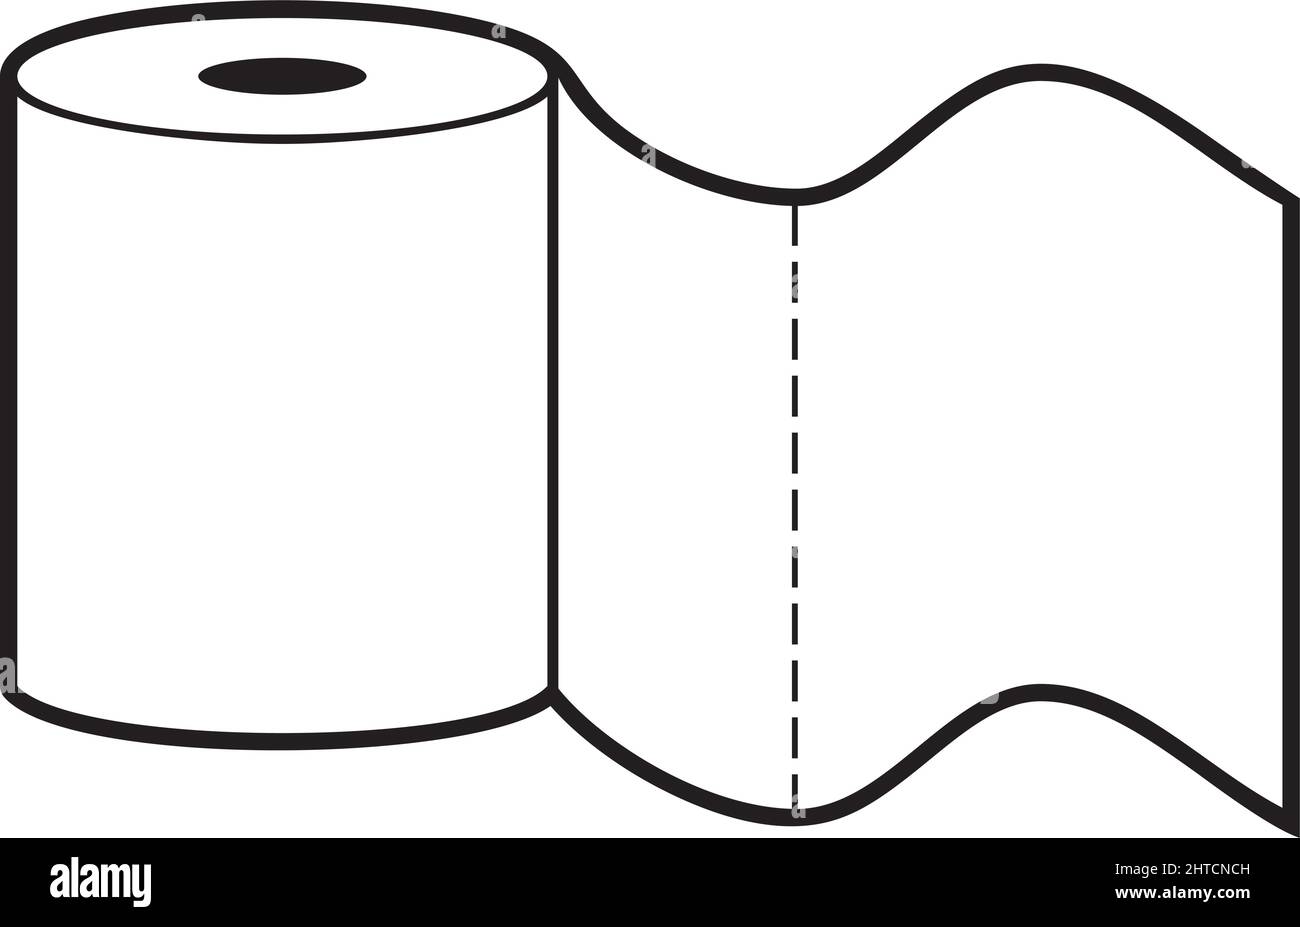 Toilettenpapierrolle – schwarz-weißes Vektordesign Stock Vektor